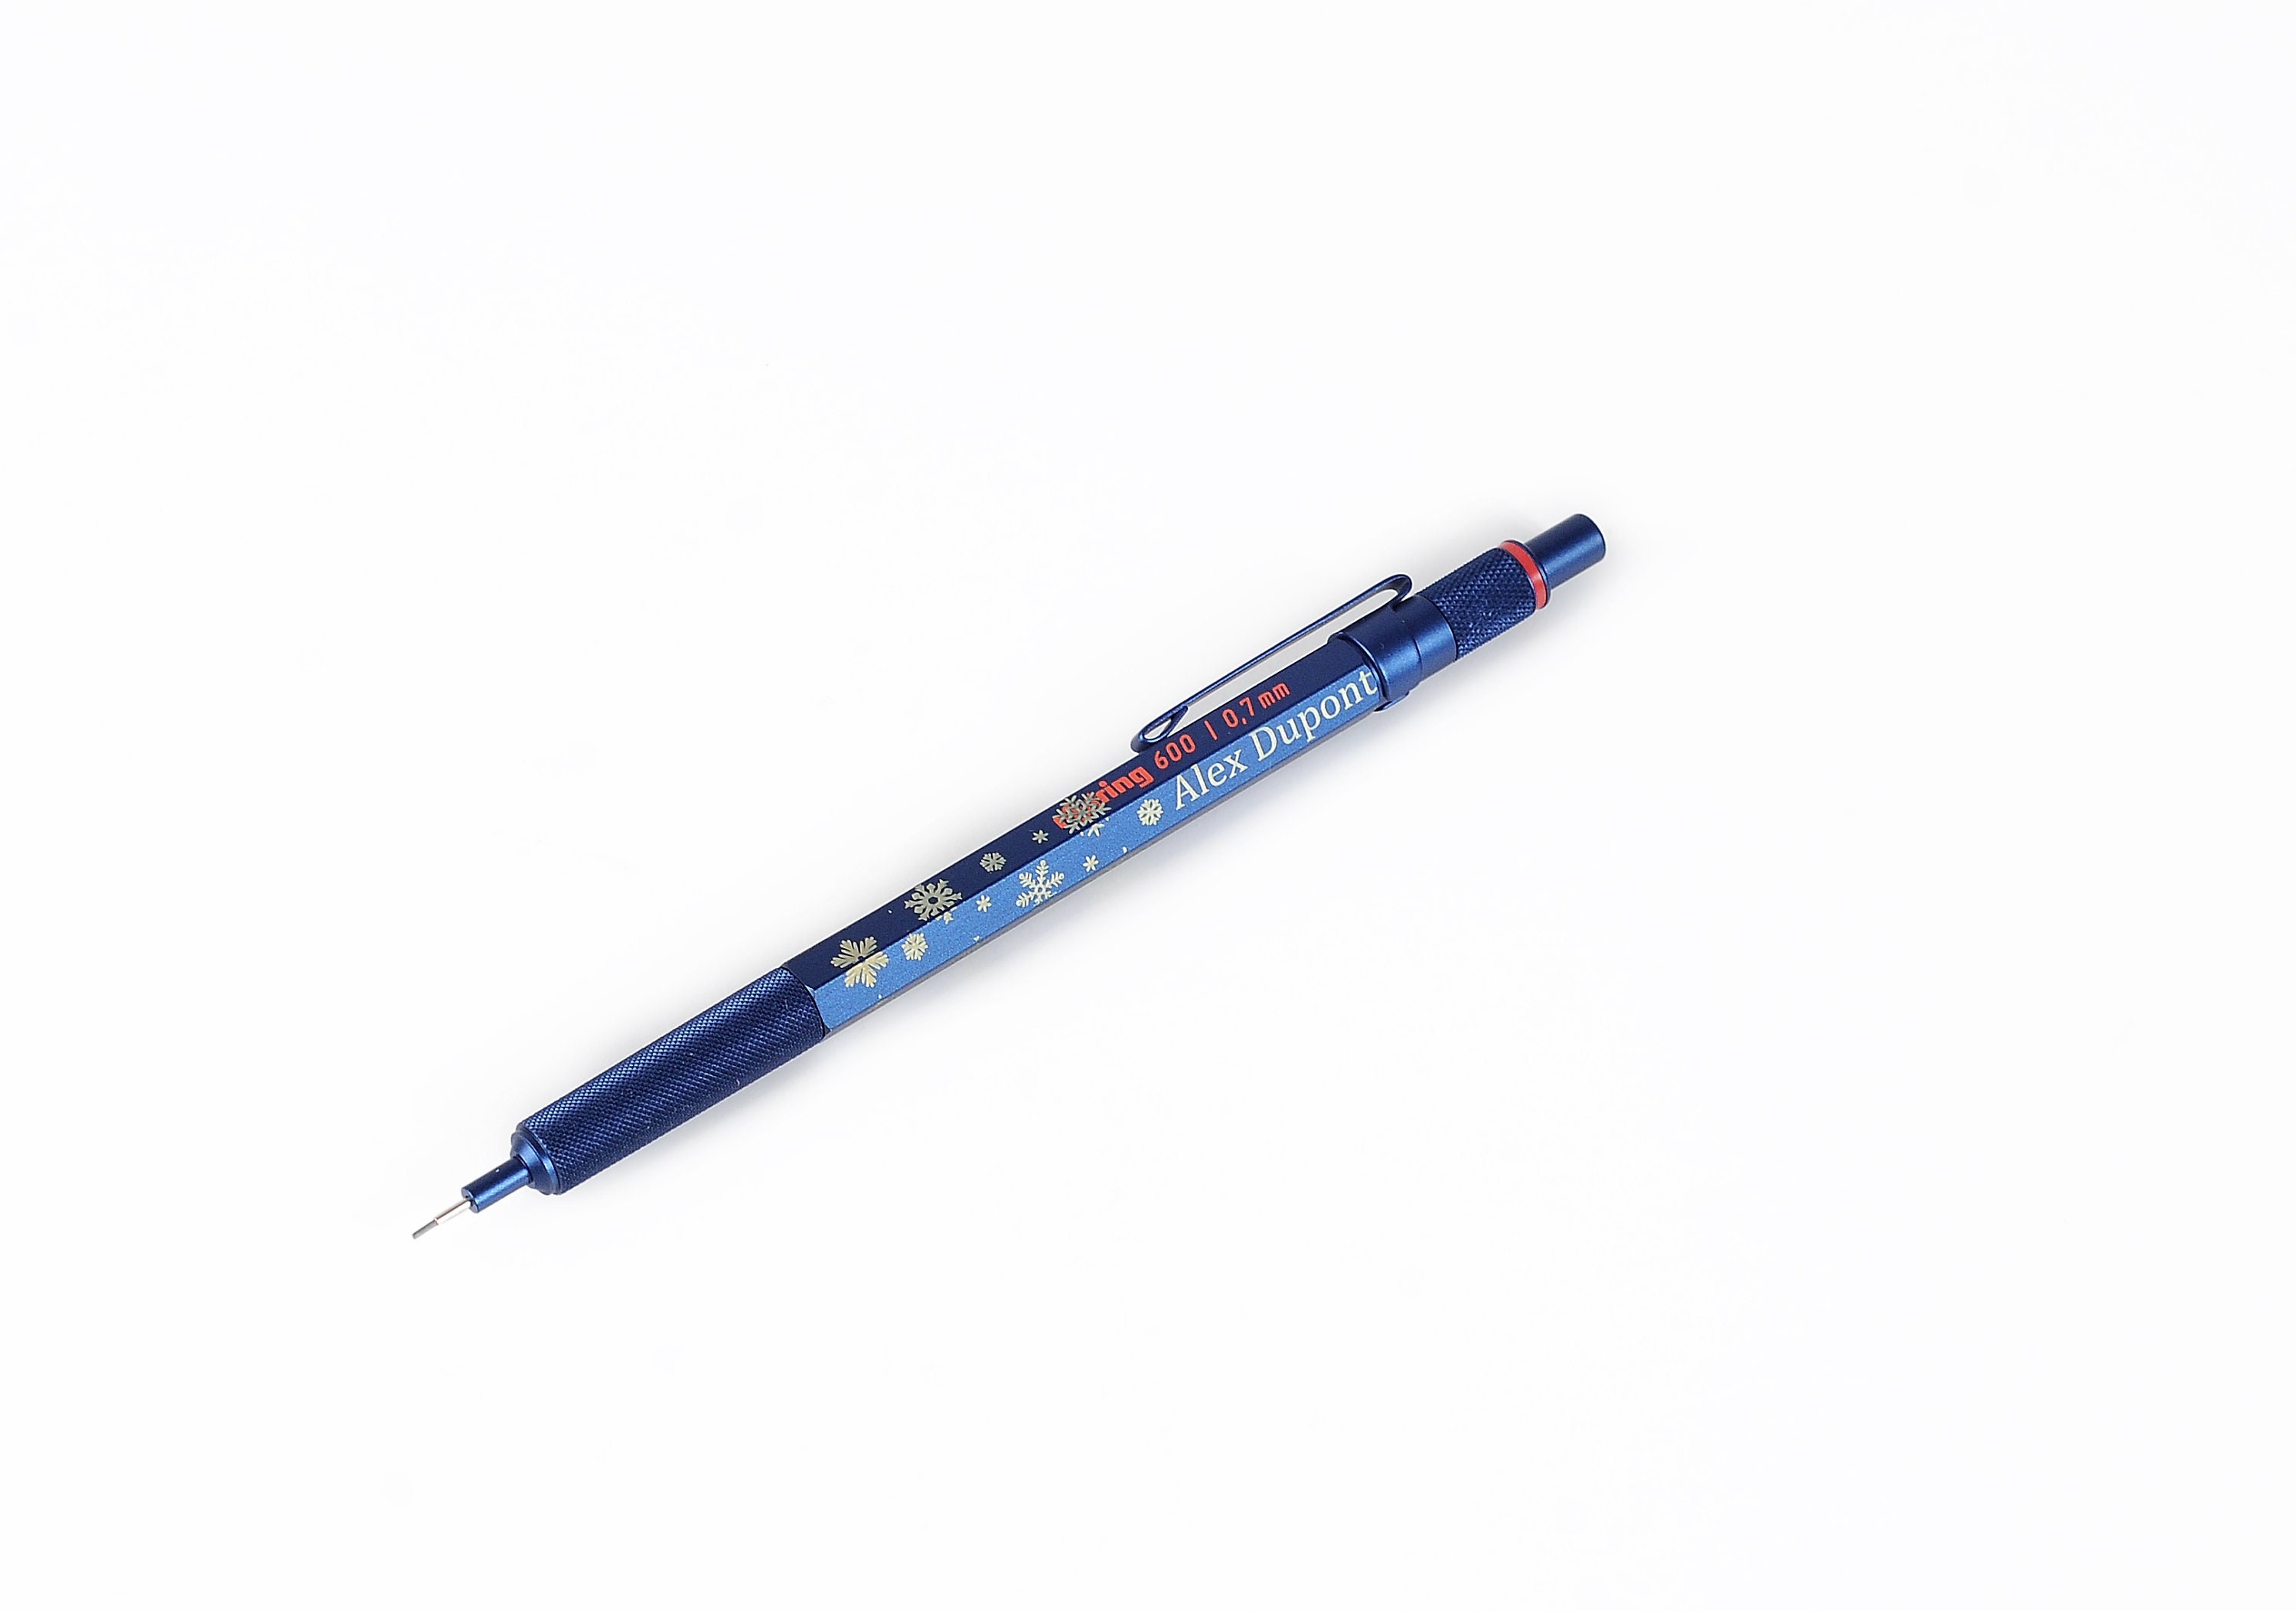 Koh-i-noor Rapidosketch Technical Pen Set, 0.50mm Nib, Stainless